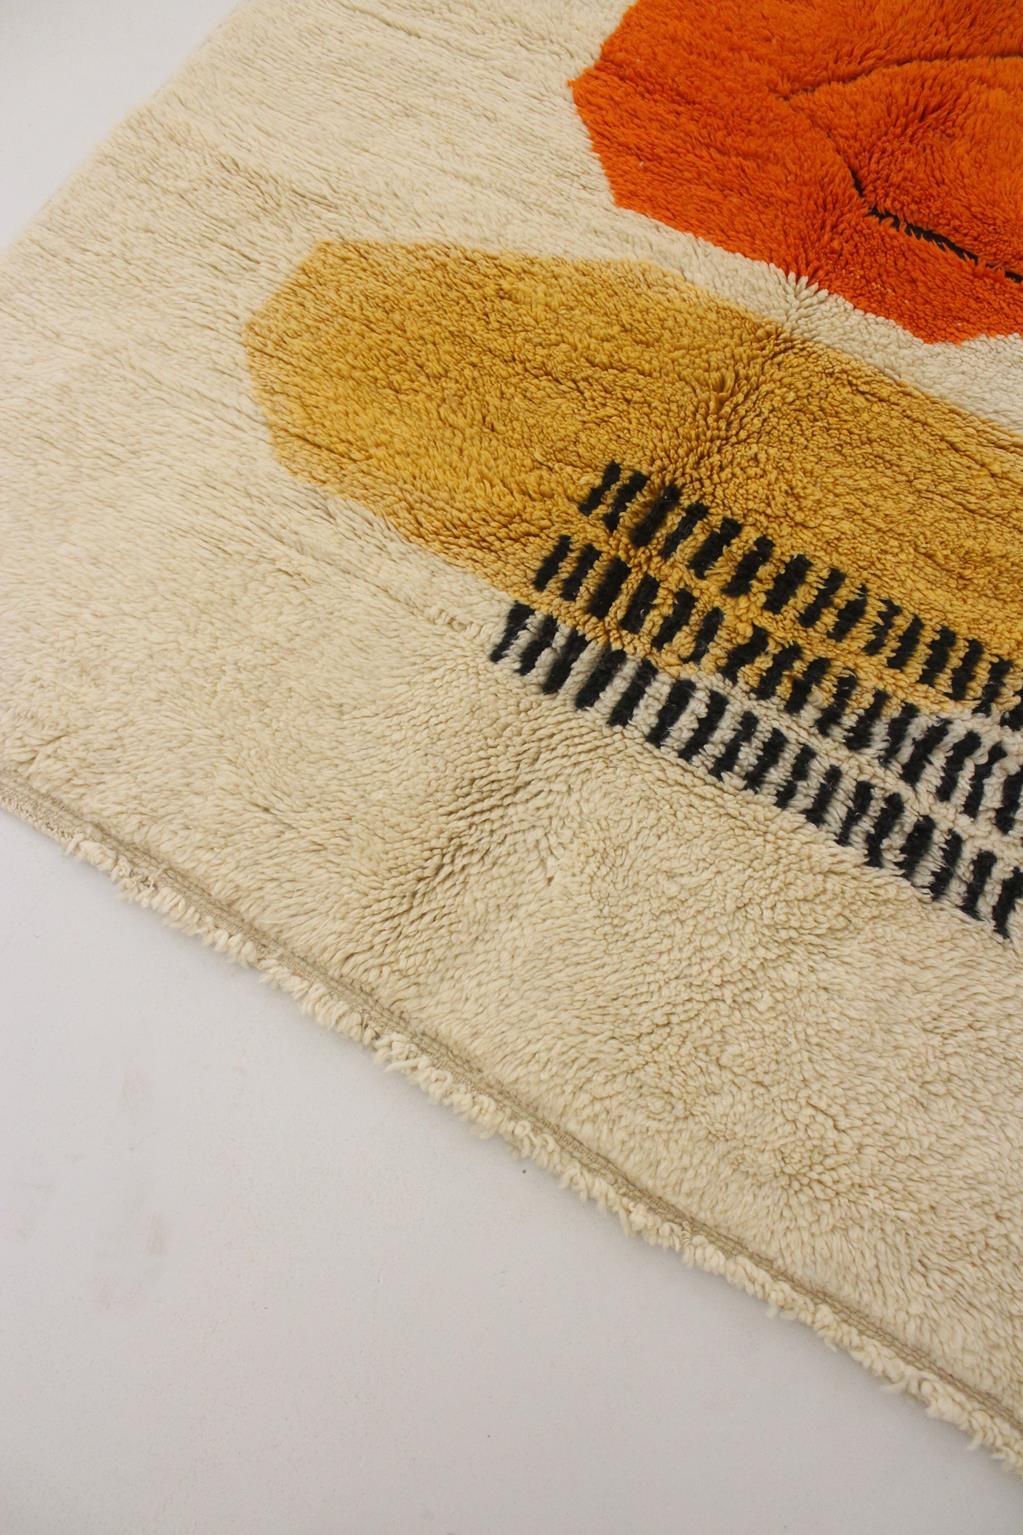 Modern Moroccan wool Mrirt rug - Cream/orange/yellow - 5x7.3feet / 153x223cm For Sale 1